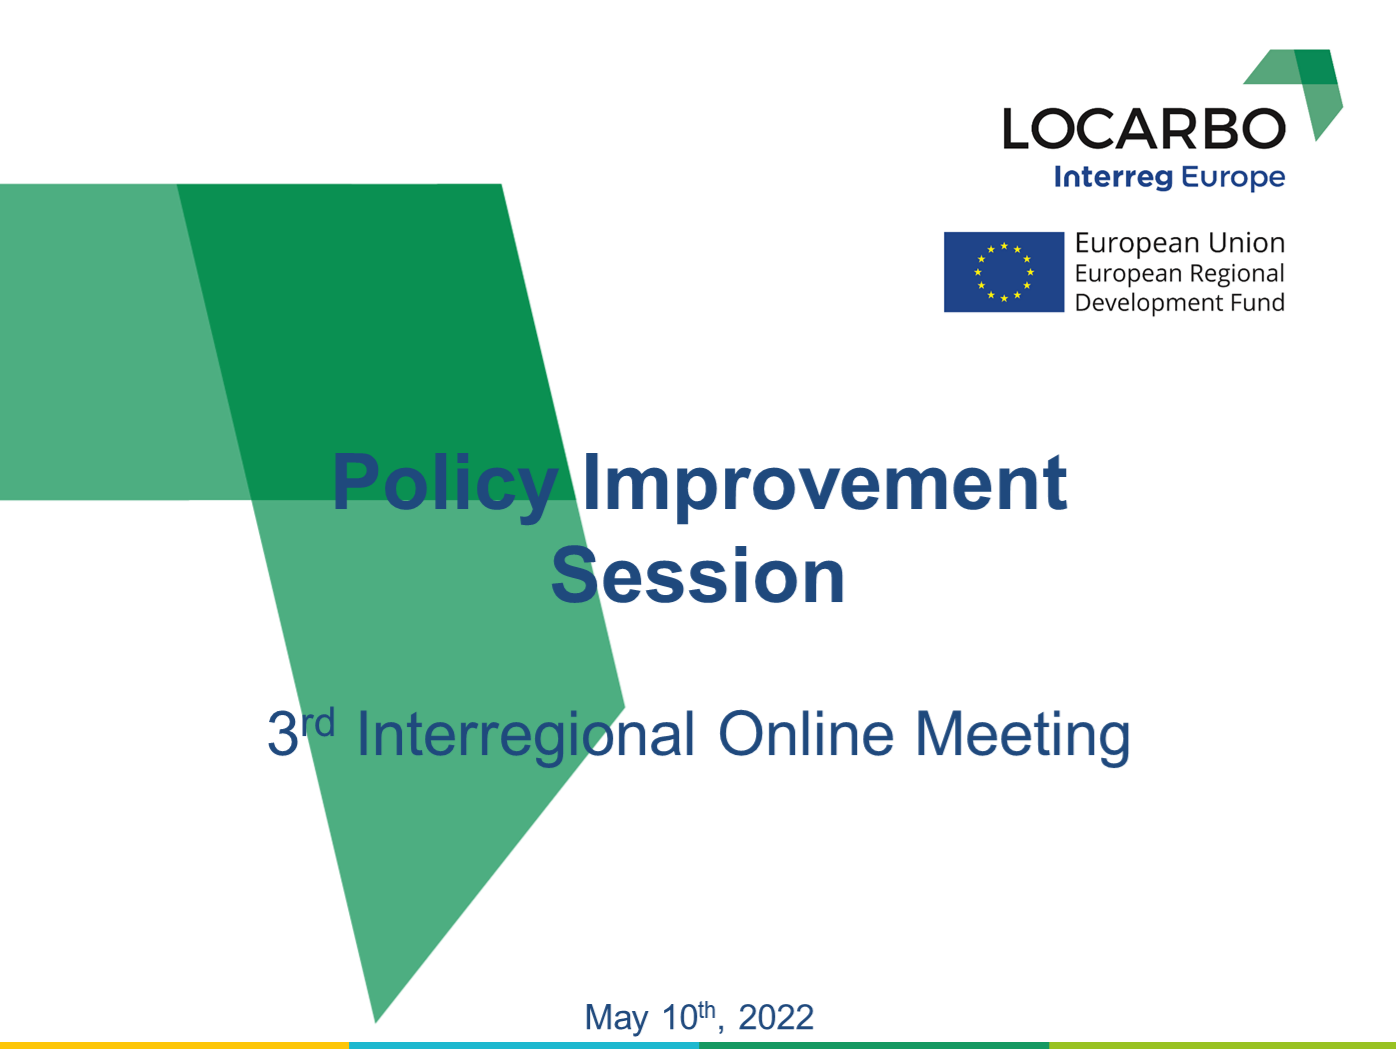 3rd Interregional Online Meeting: Policy Improvement